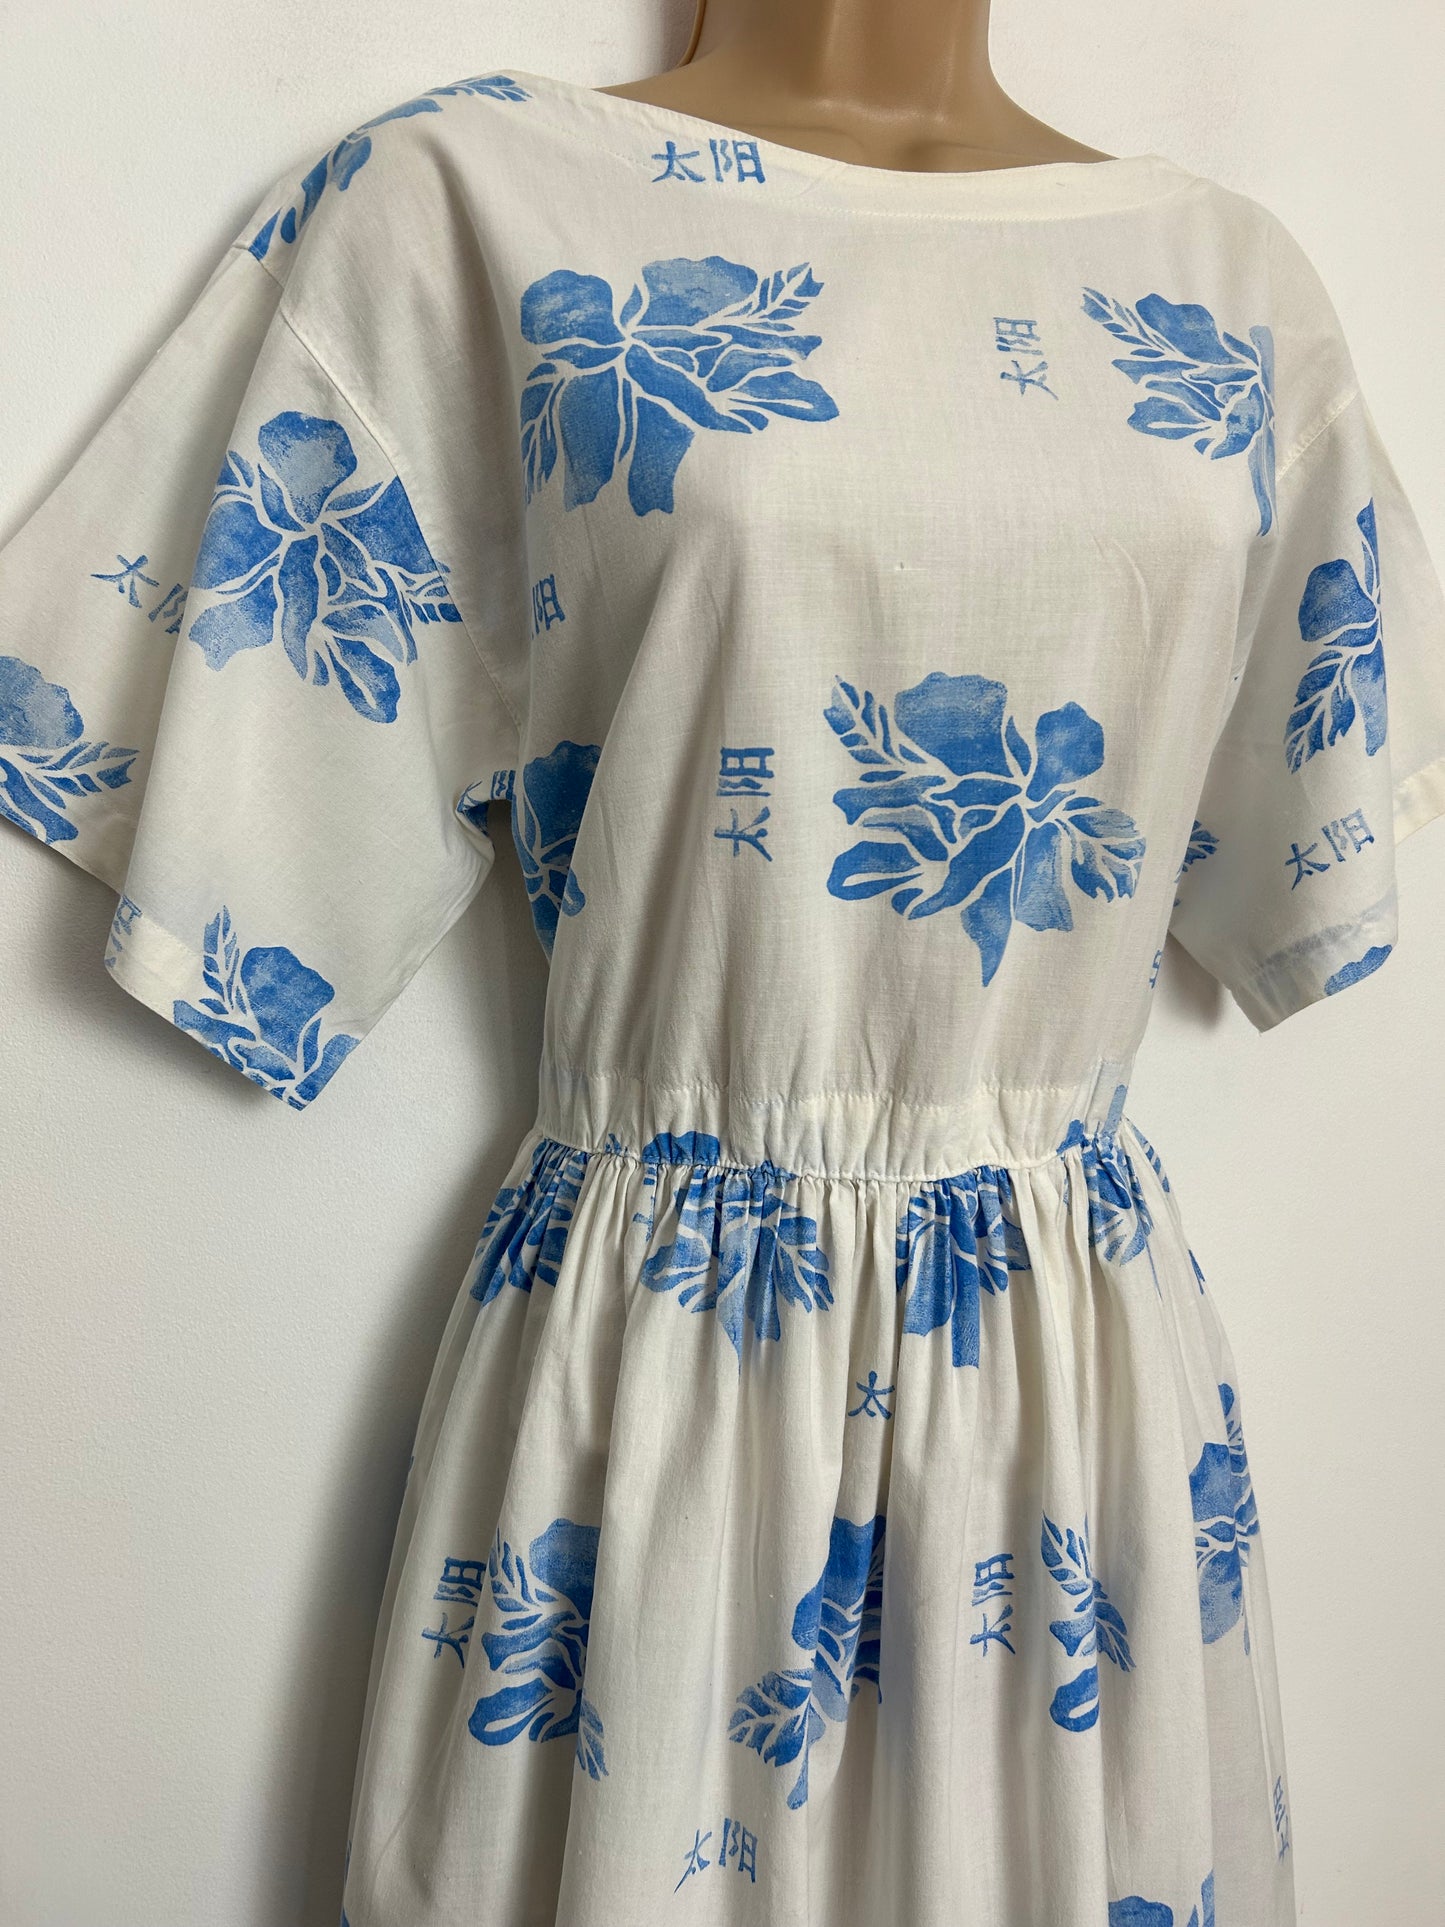 Vintage 1980s UK Size 10 White & Blue Floral & Japanese Letters Short Sleeve Criss Cross Back Summer Cotton Dress